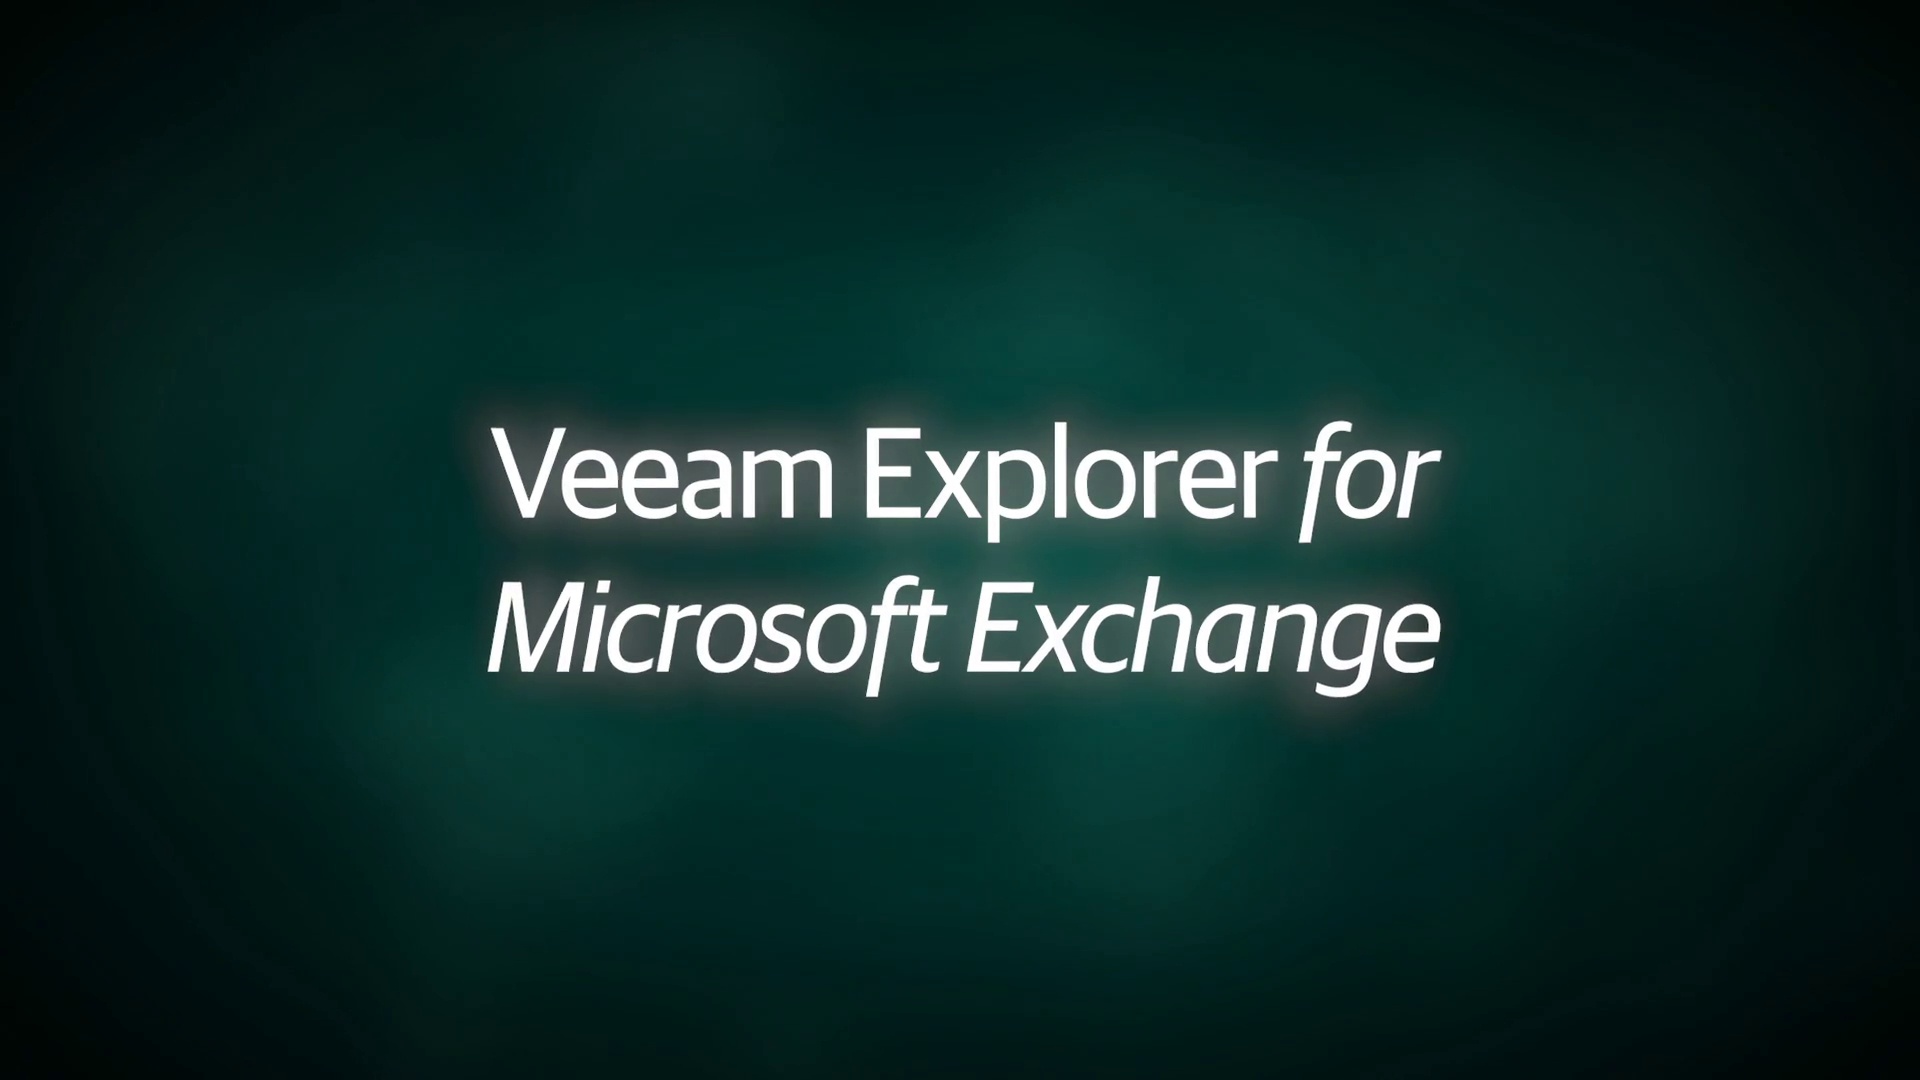 Veeam Explorer for Microsoft Exchange